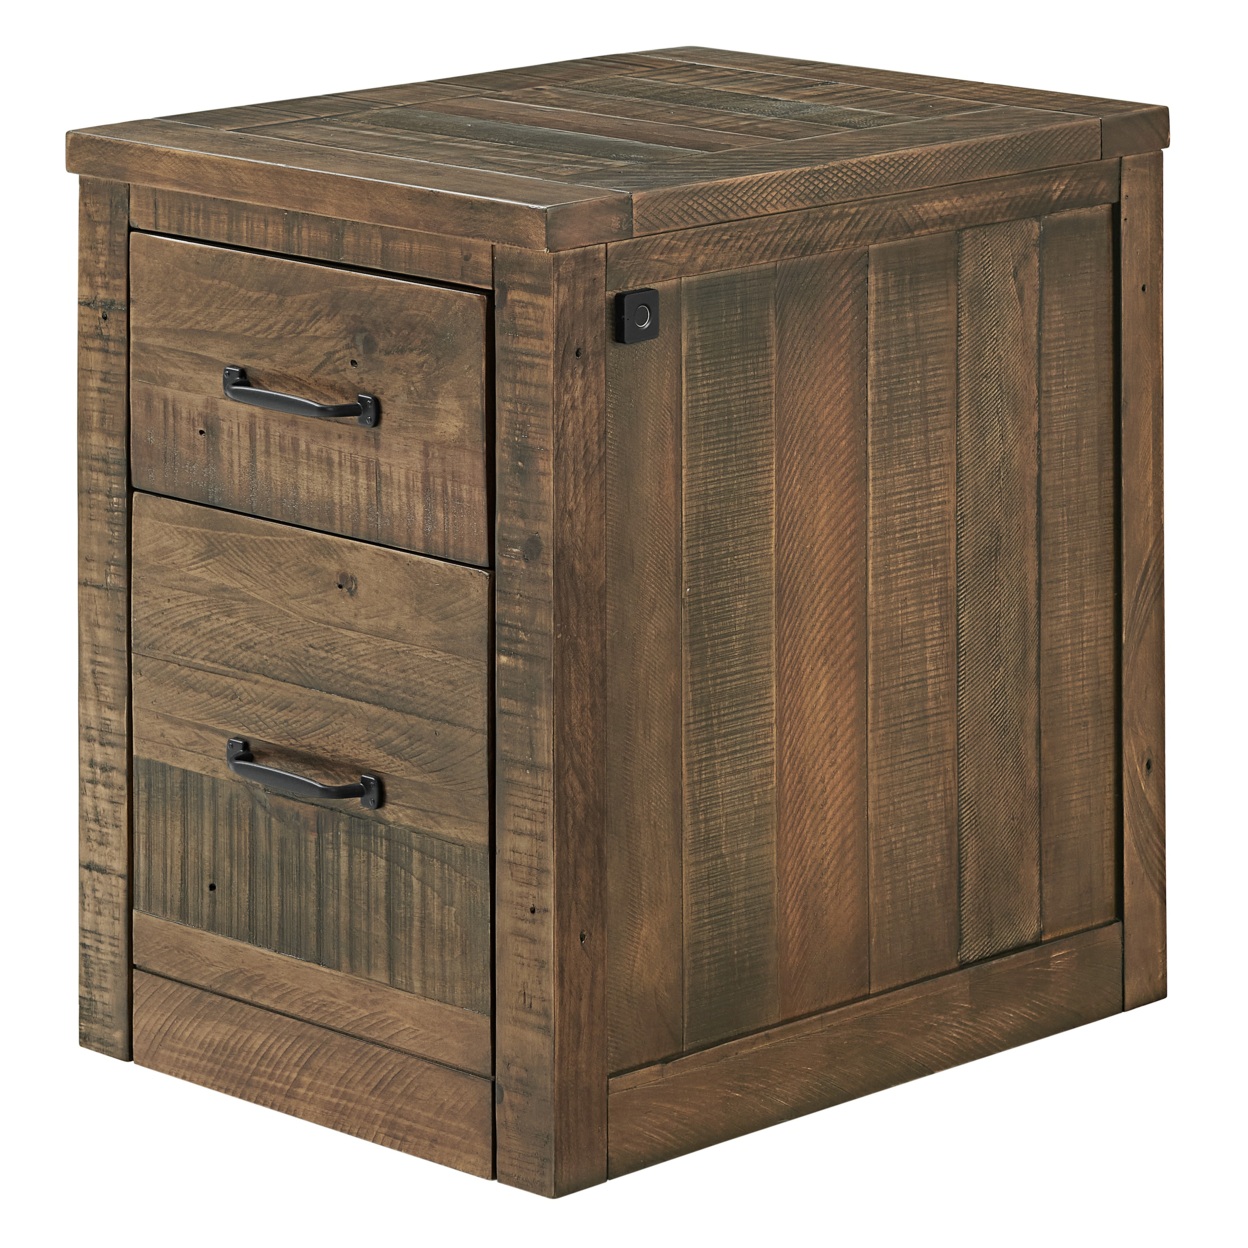 Emmy 24 Inch 2 Drawer File Cabinet With Biometric Lock, Natural Brown Wood- Saltoro Sherpi